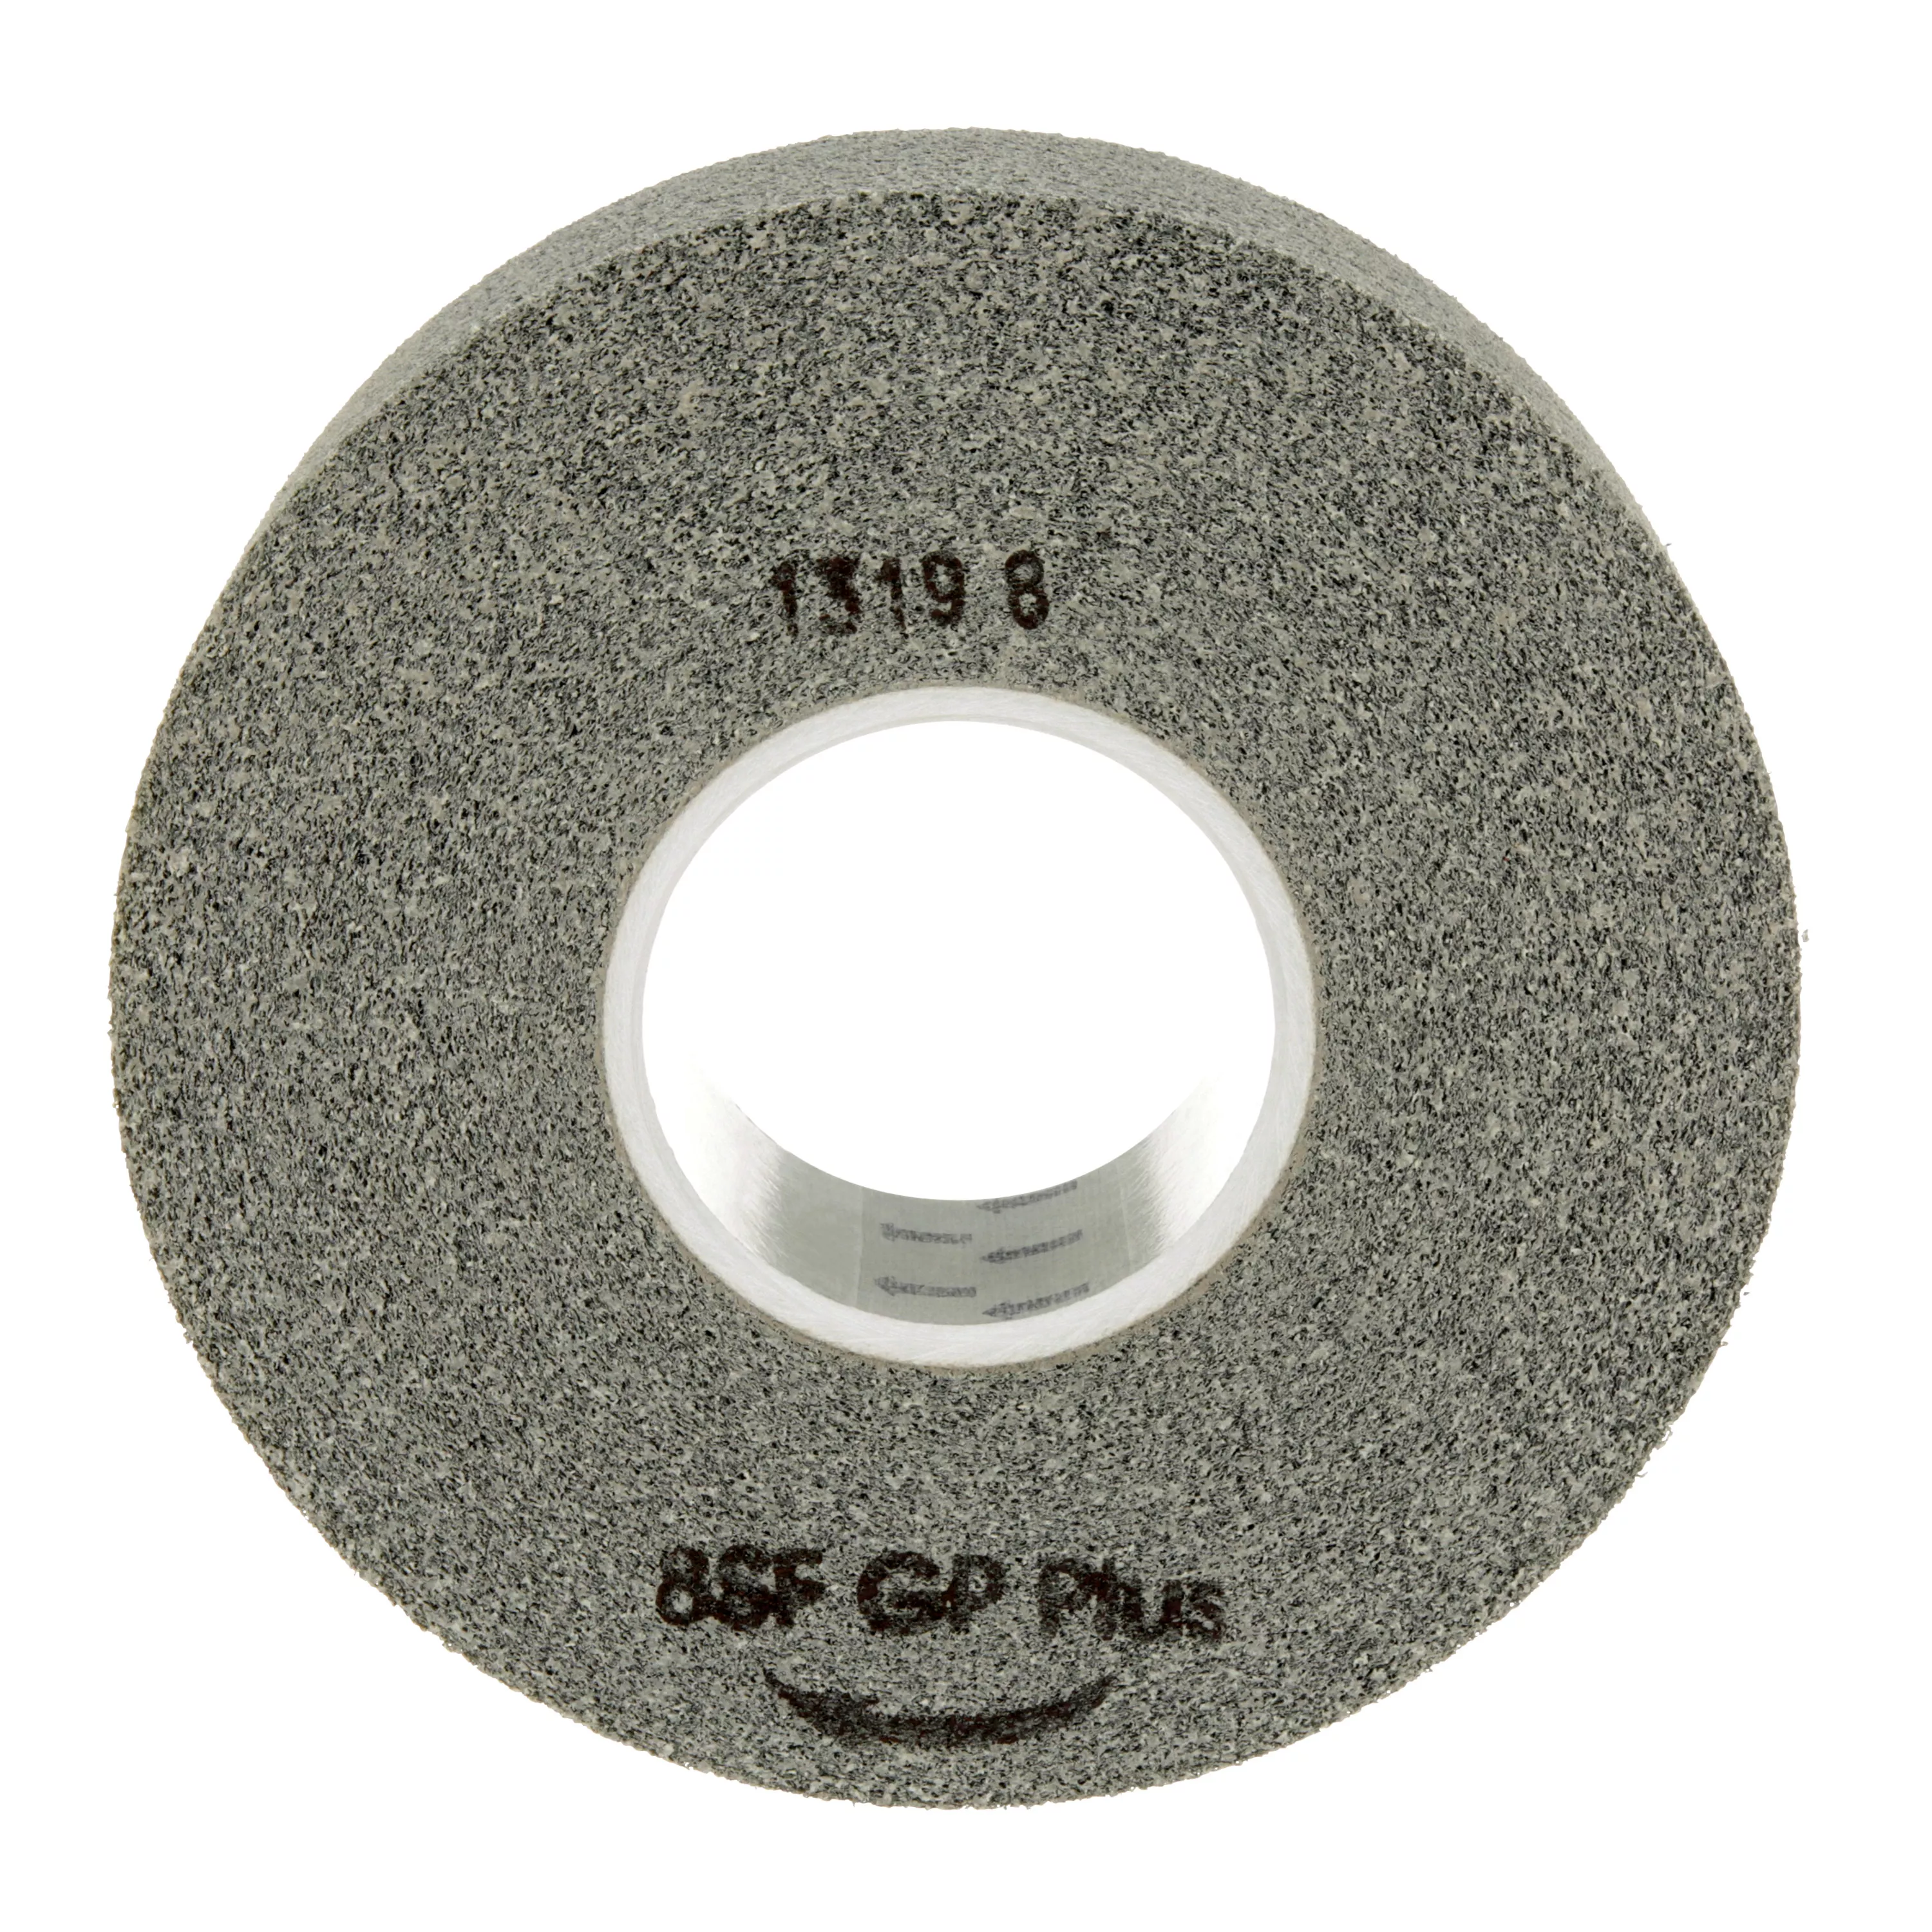 SKU 7000046900 | Standard Abrasives™ GP Plus Wheel 853453